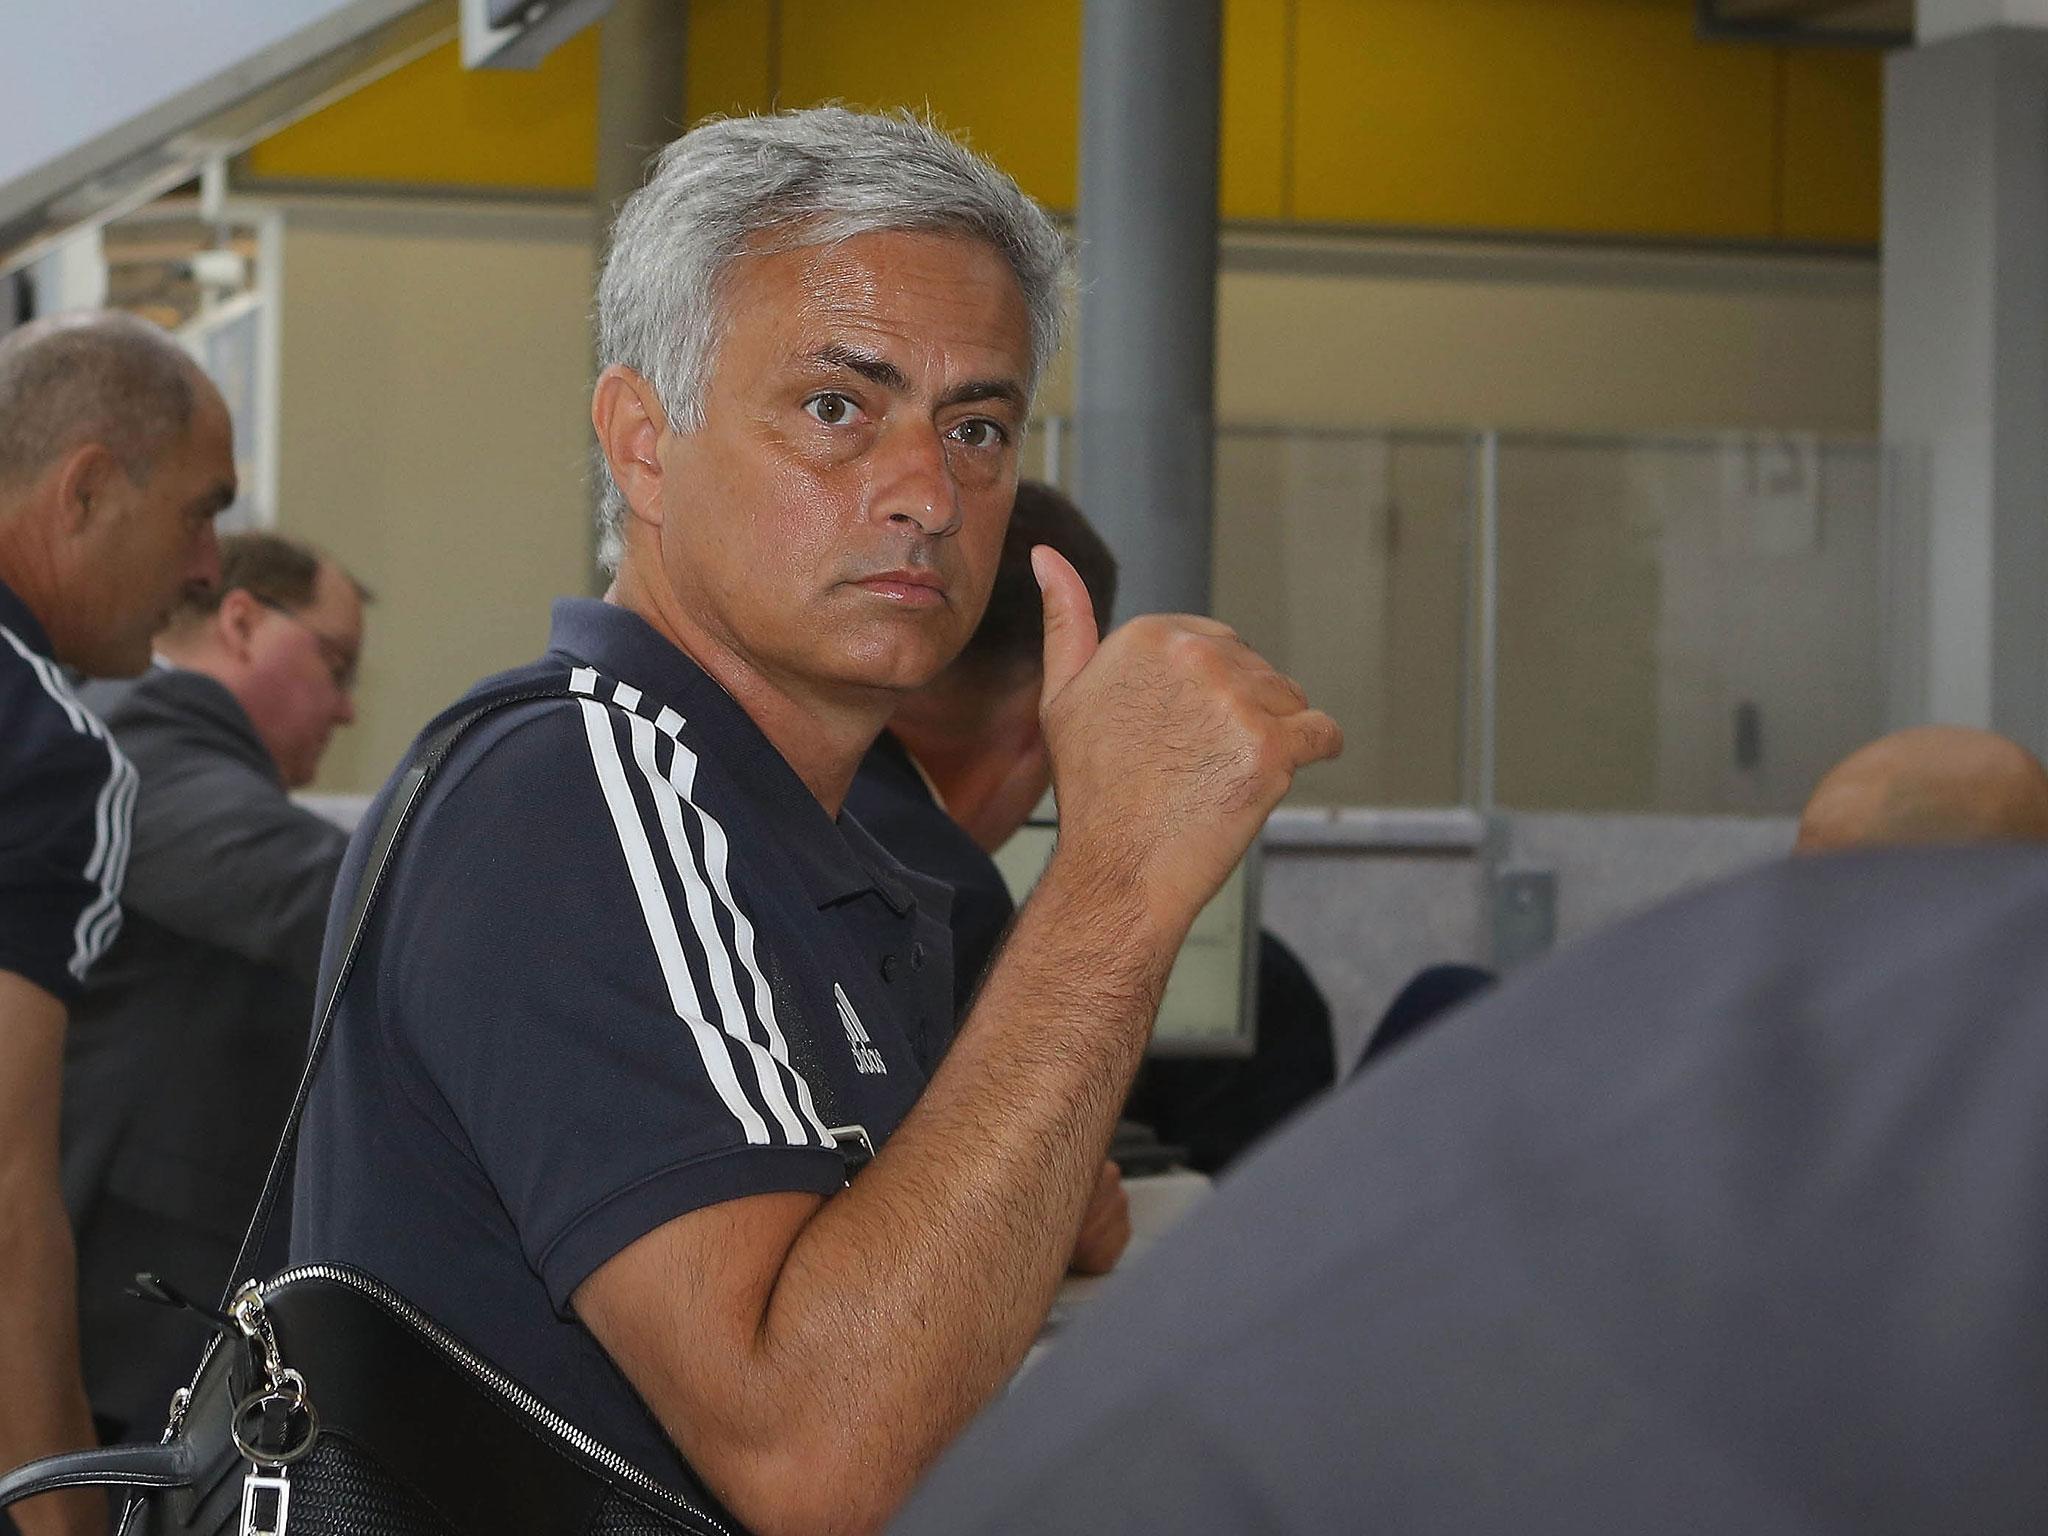 Jose Mourinho has selected his squad for United's pre-season tour